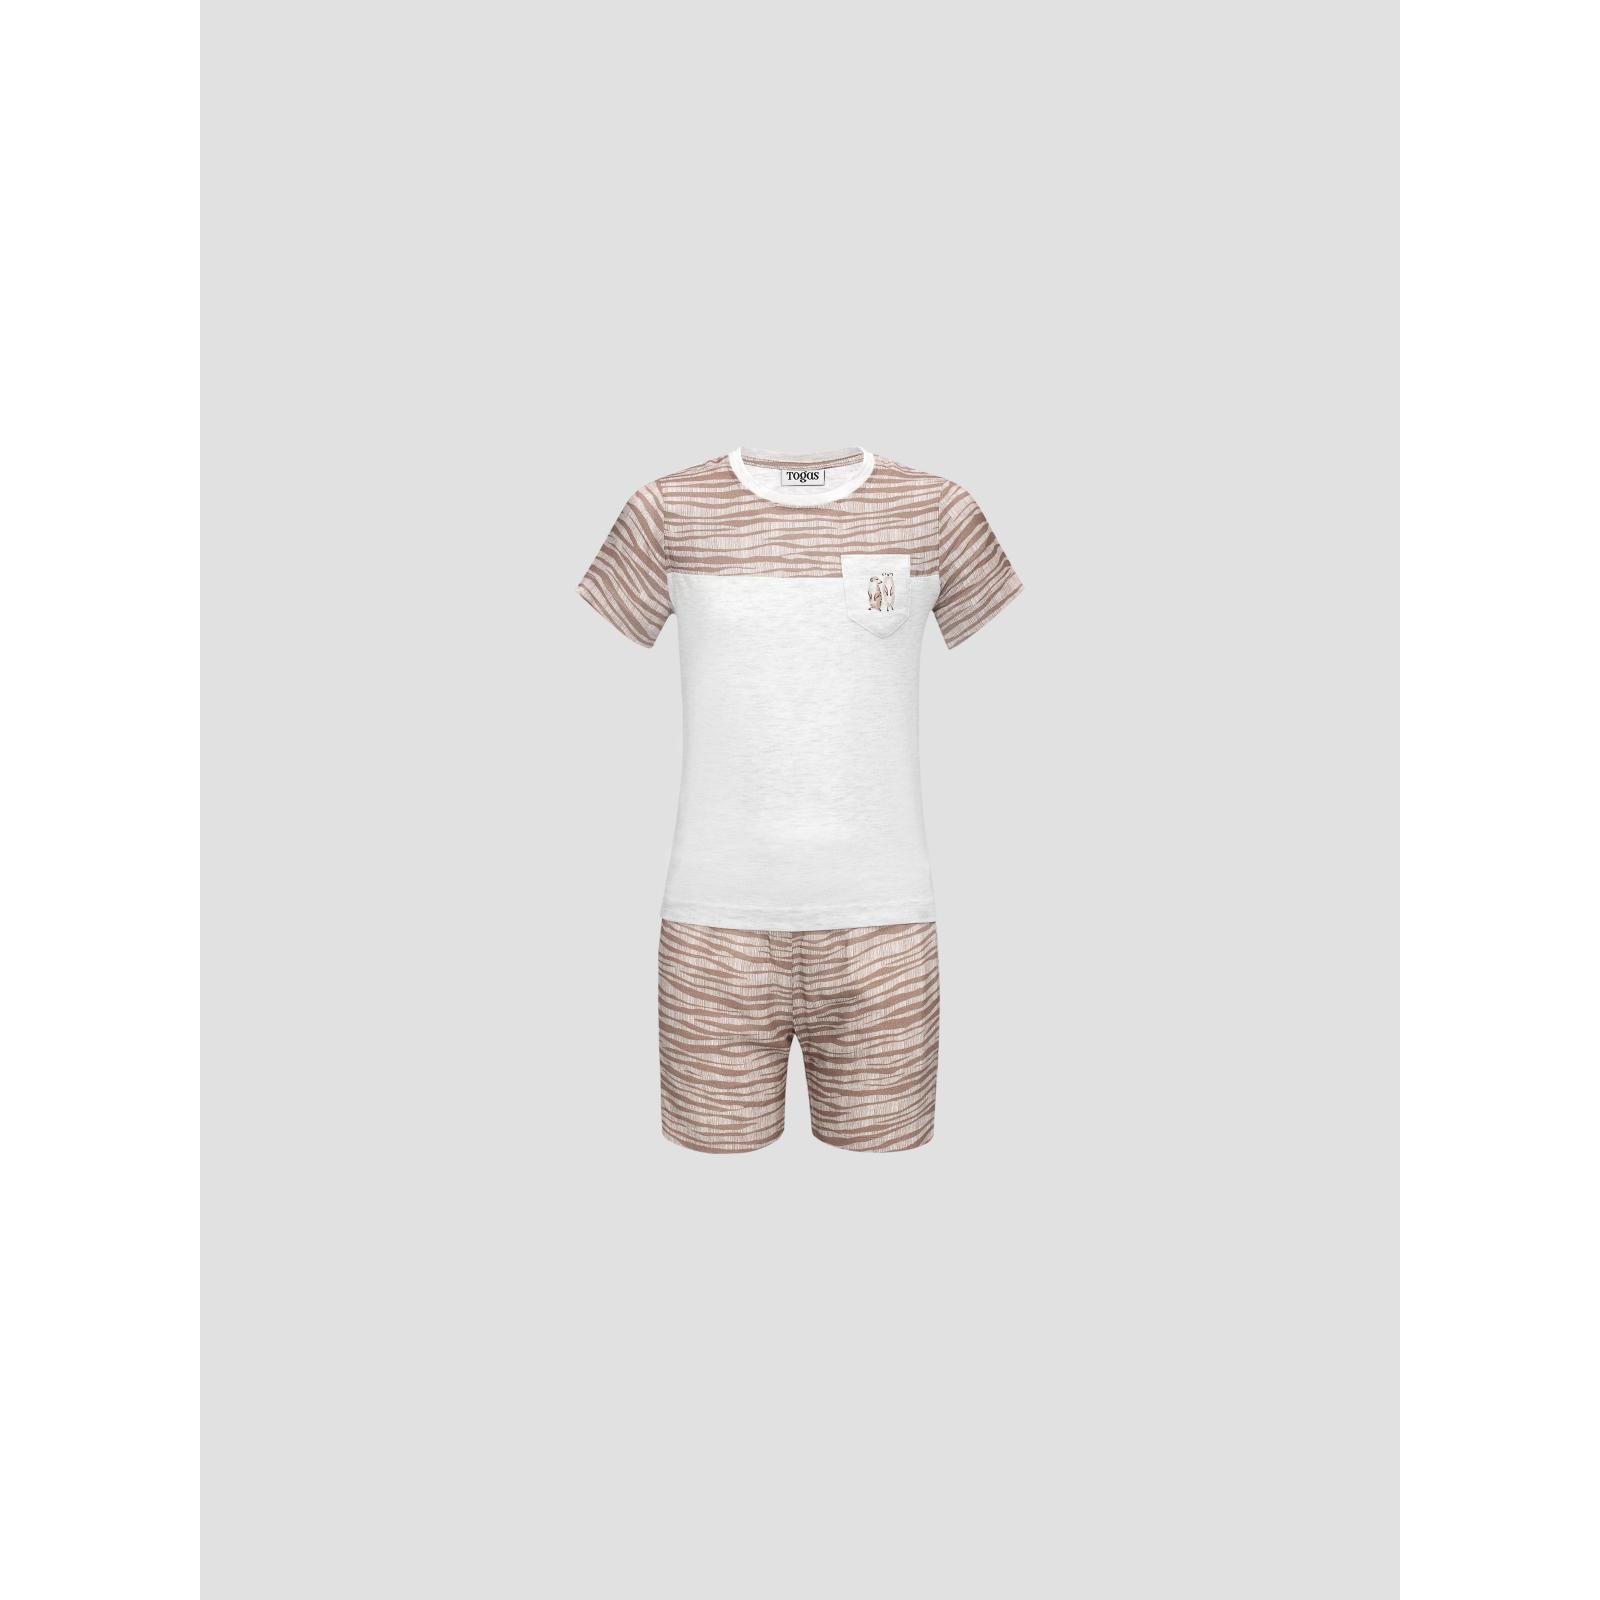 Пижама для мальчиков Kids by togas Сафари бежевый 140-146 см жен пижама с брюками фреш розовый р 54